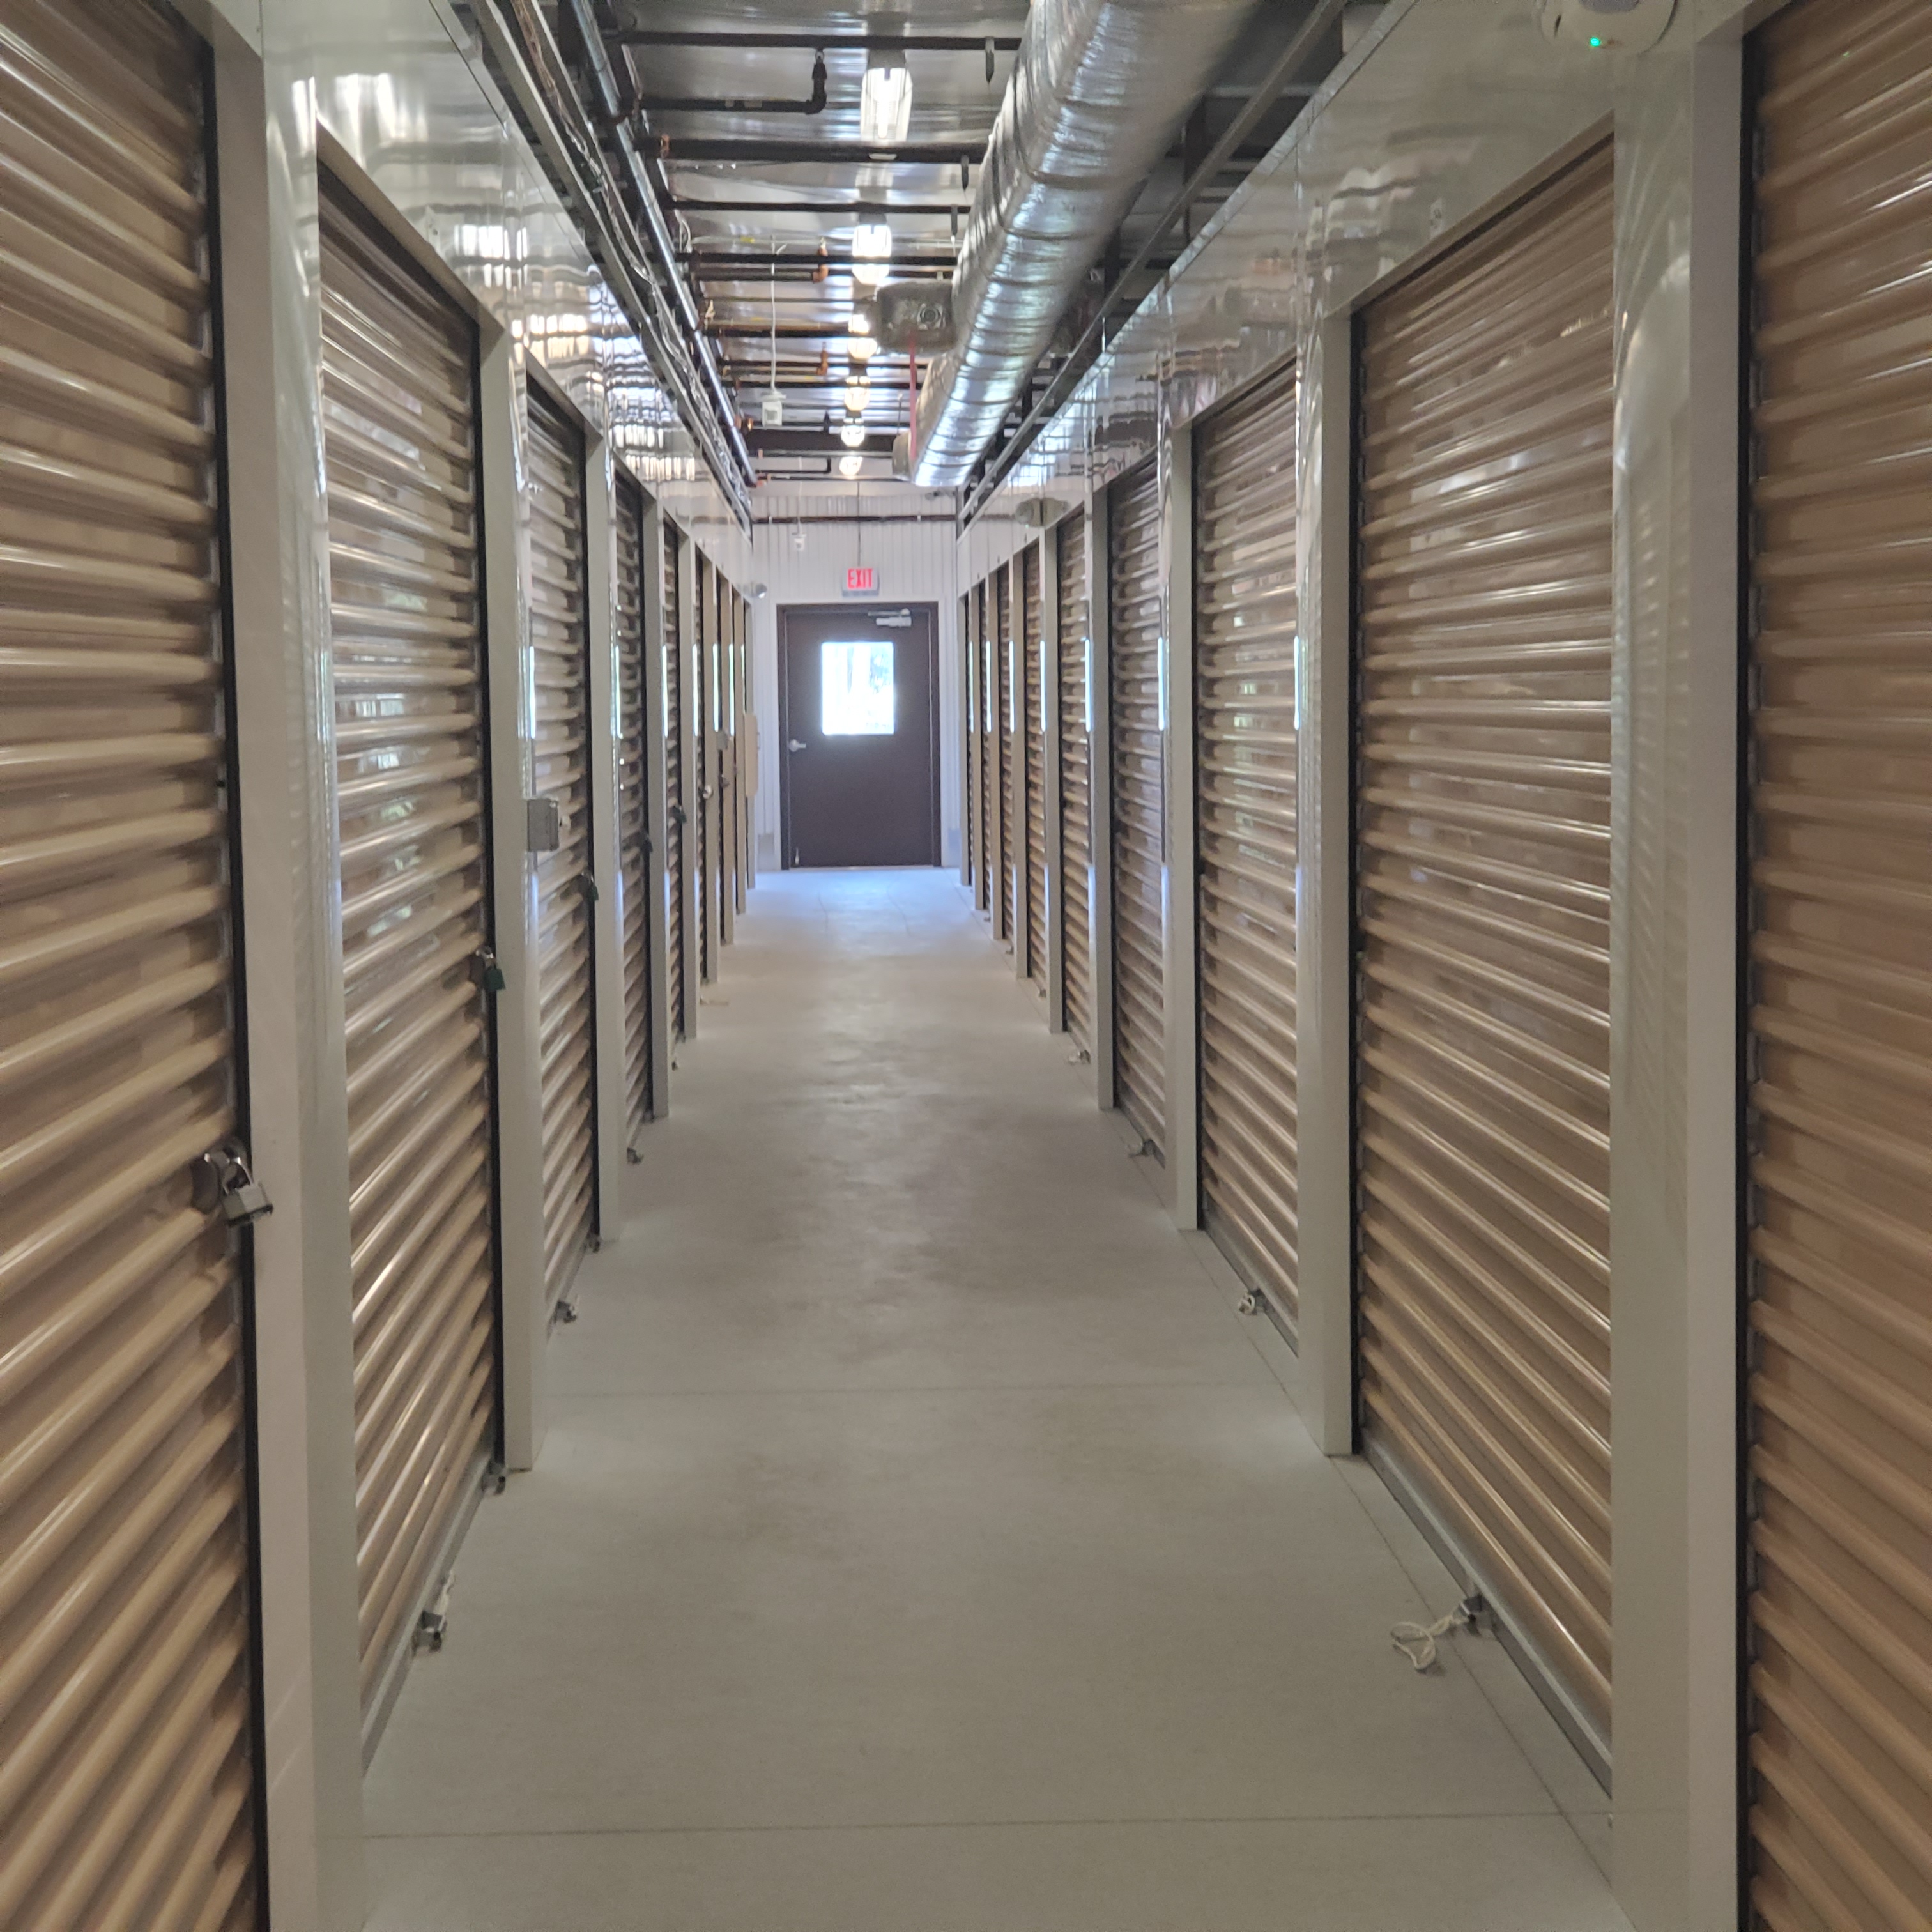 hallway of interior storage units with doors closed